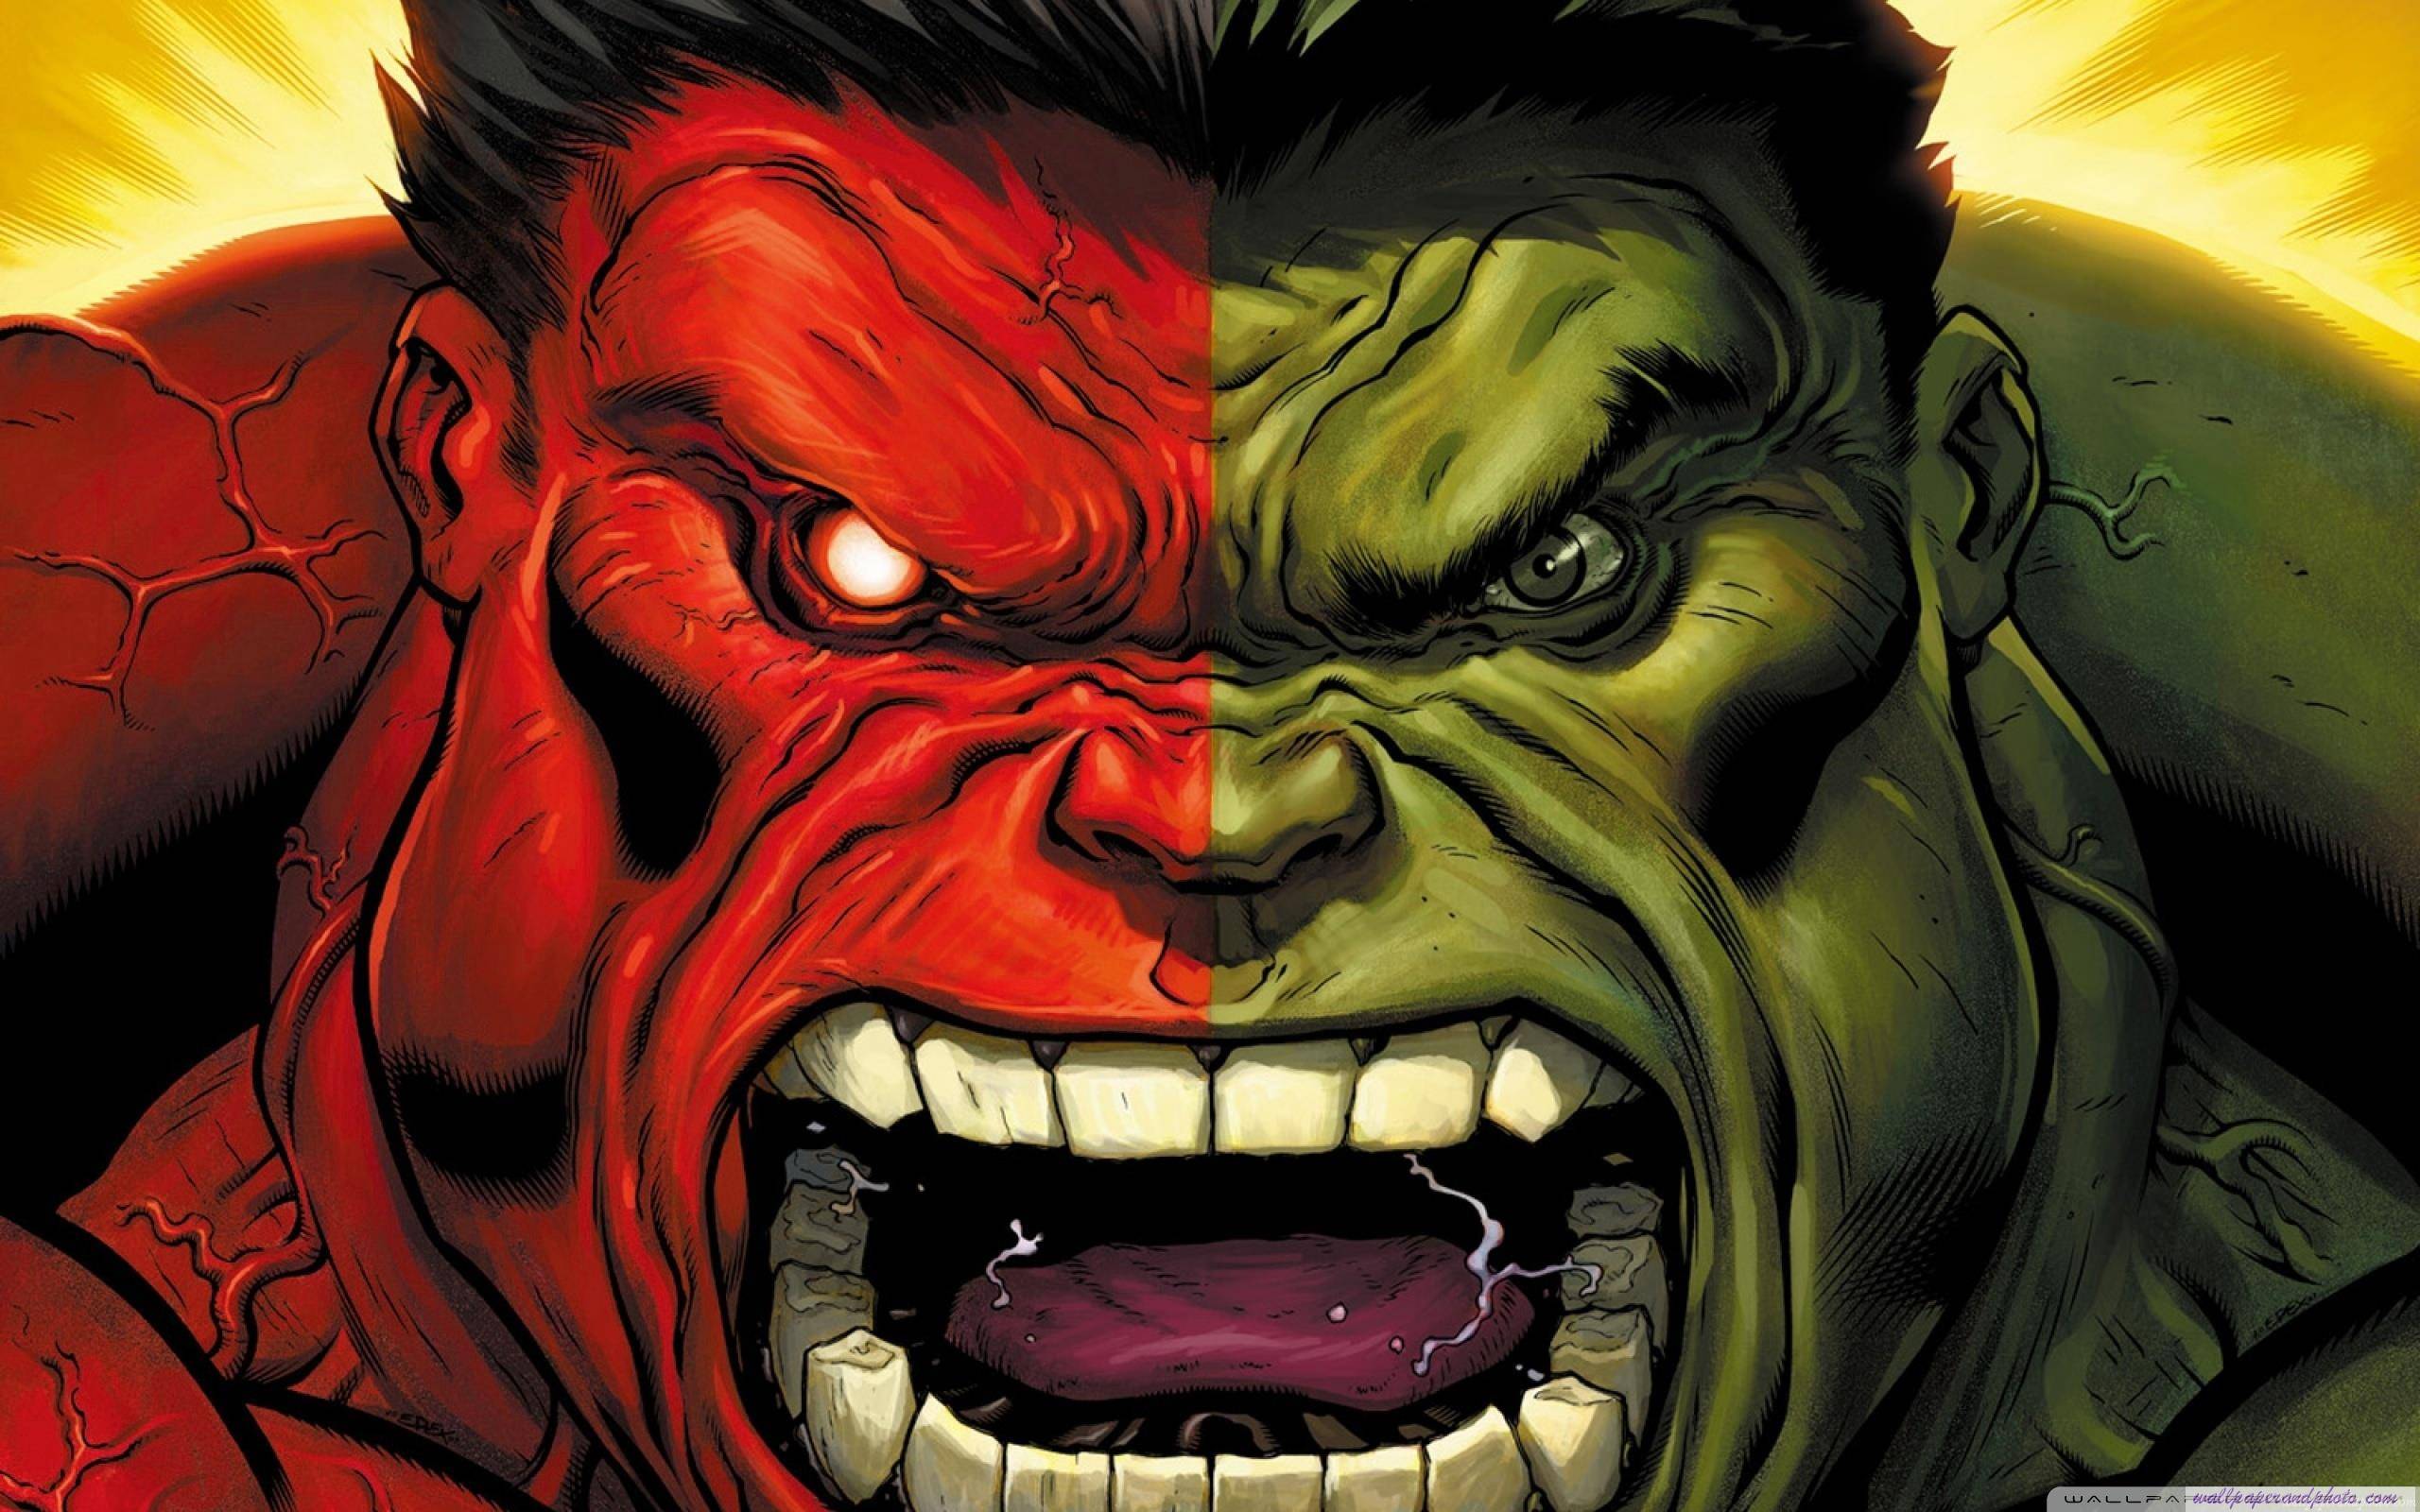 Red Hulk vs Green Hulk HD 16:9 16:10 desktop wallpaper: High